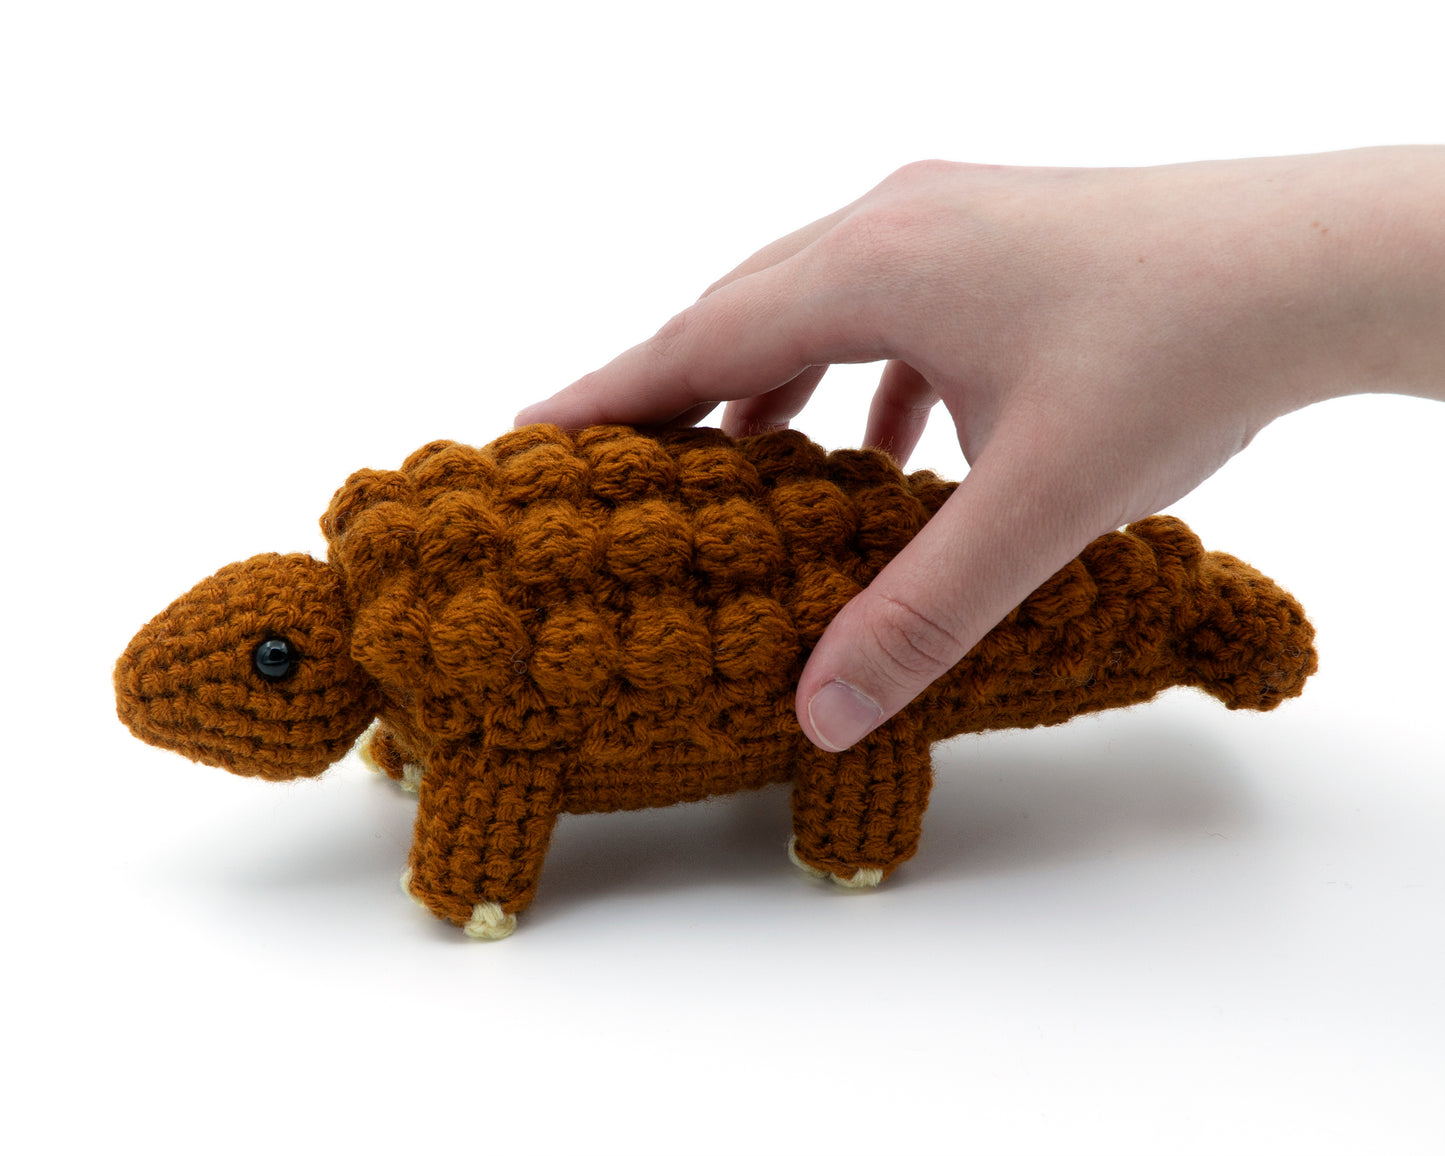 amigurumi crochet ankylosaurus pattern in hand for size comparison